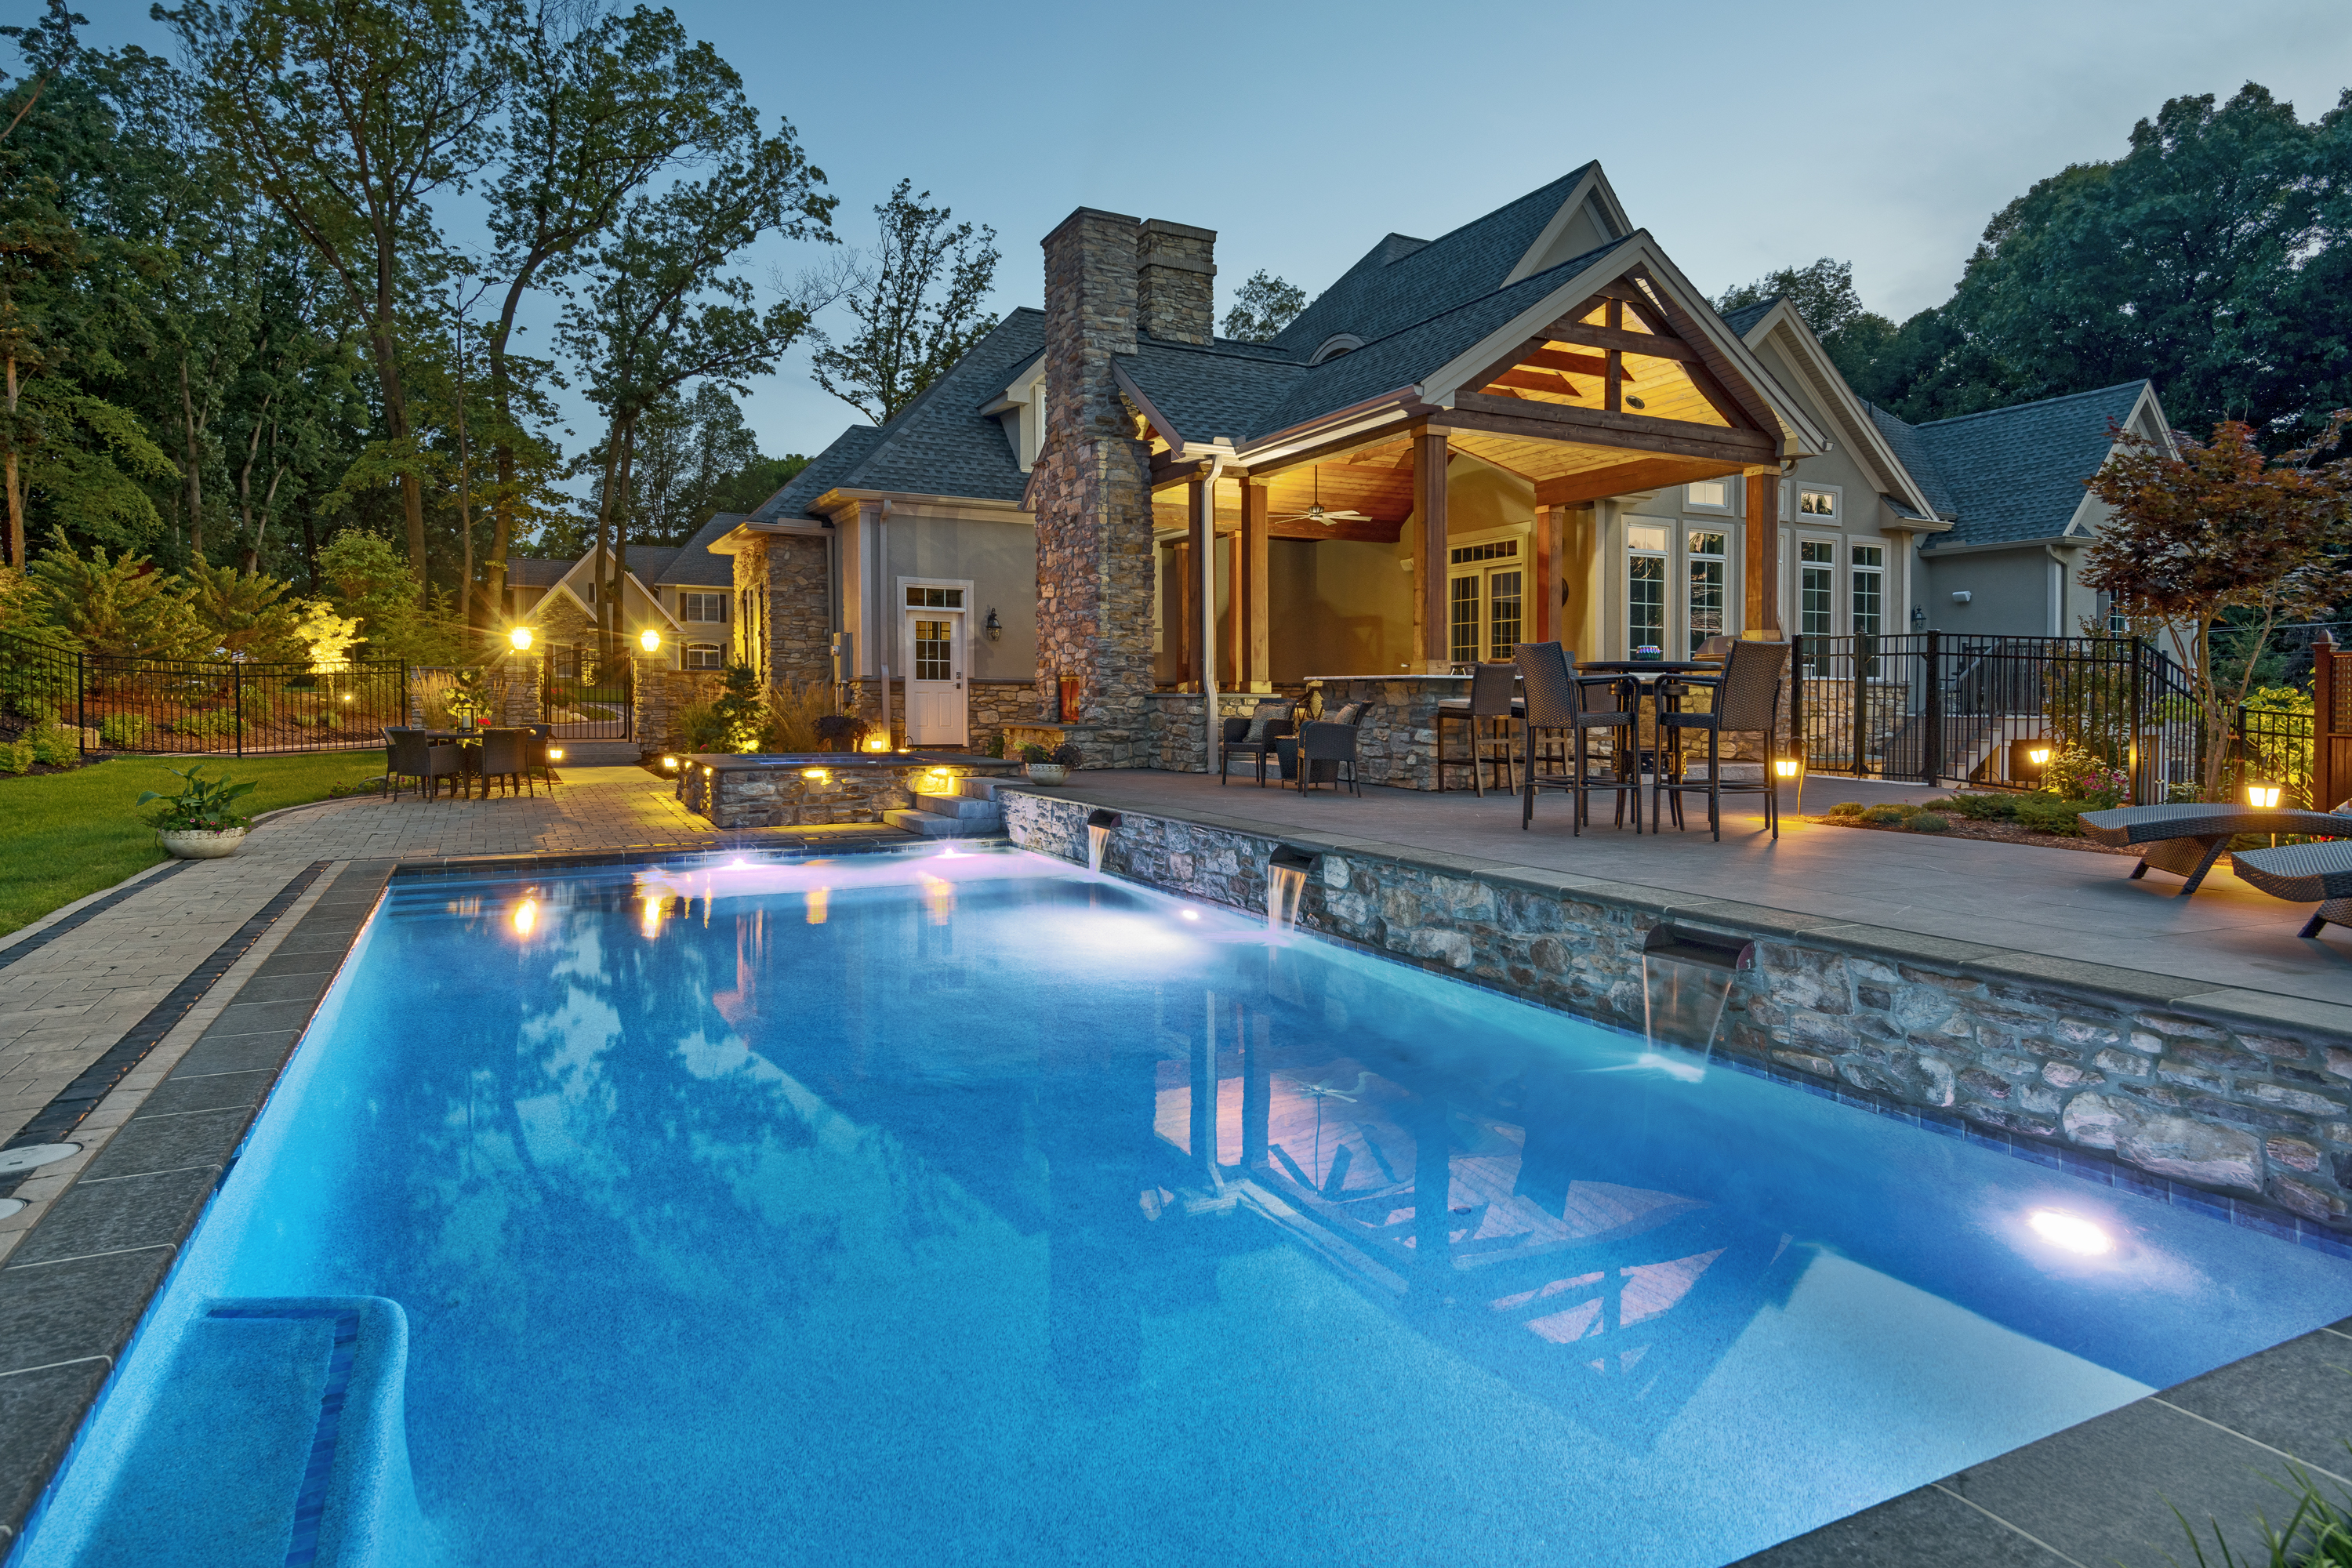 Luxury backyard pool at dusk